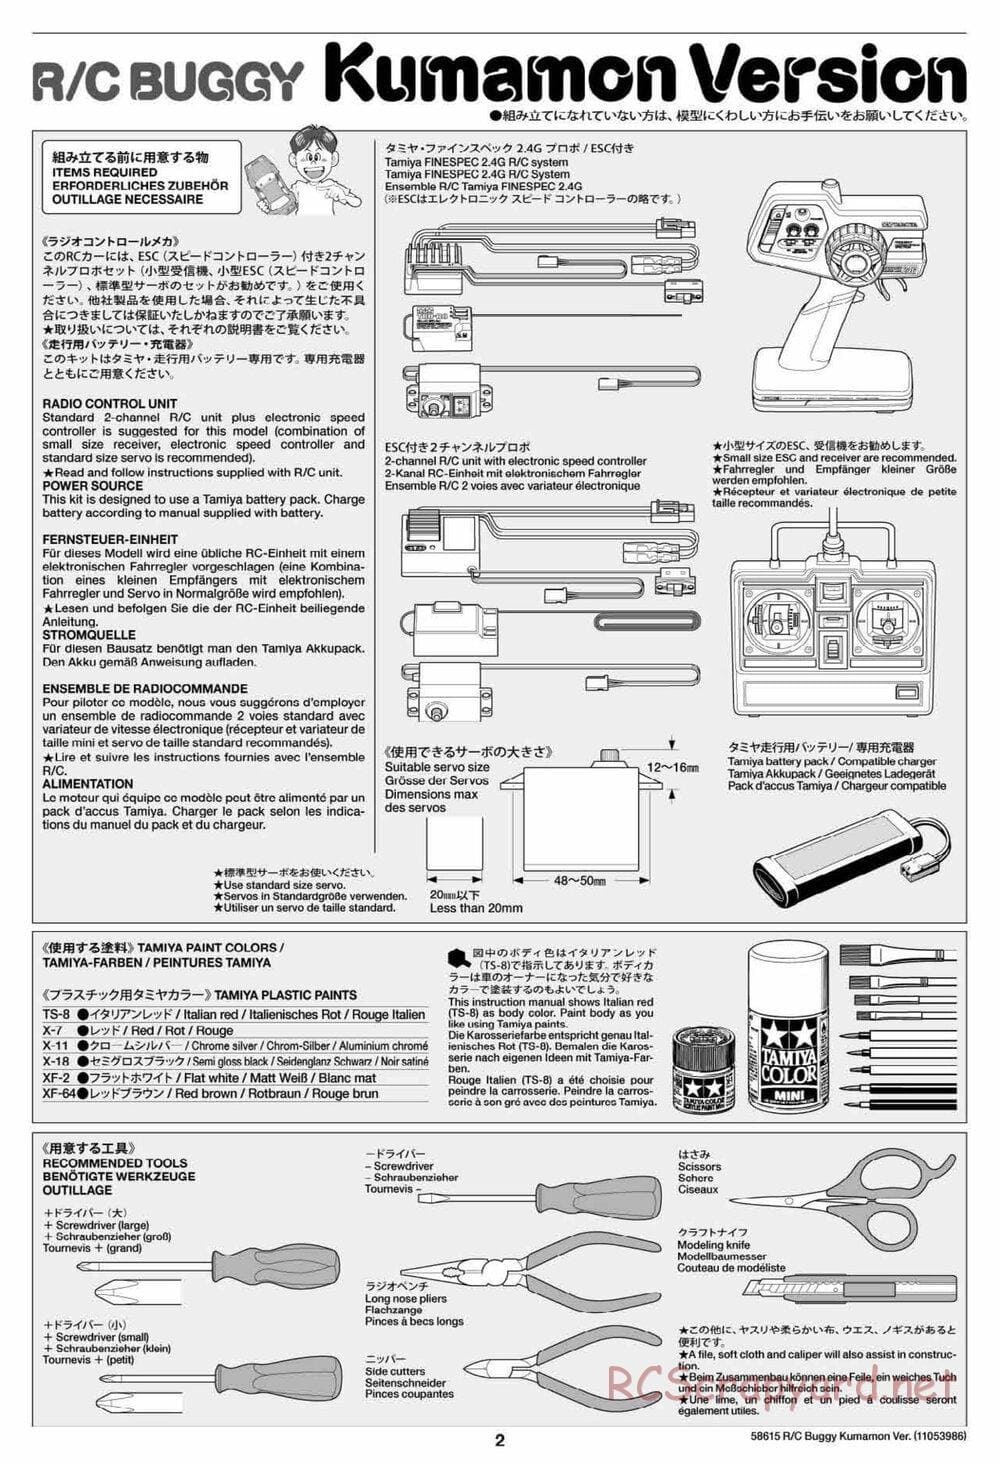 Tamiya - Buggy Kumamon Version Chassis - Manual - Page 2